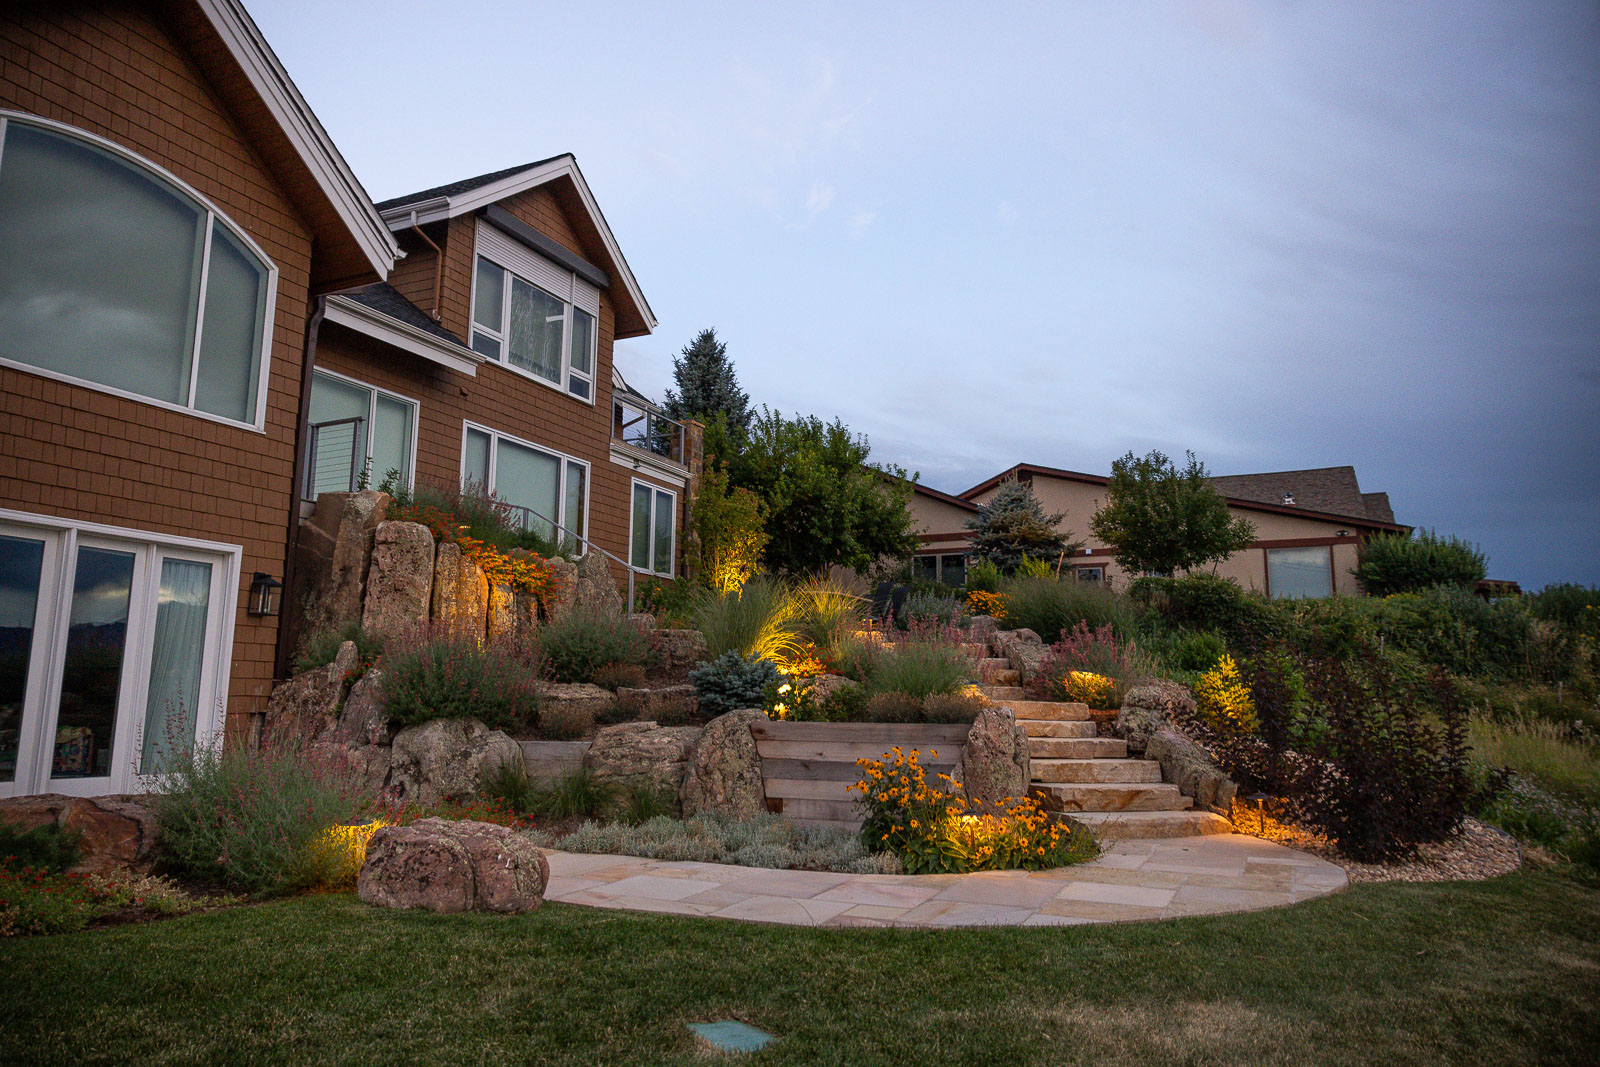 Residential landscape design backyard outdoor lighting 